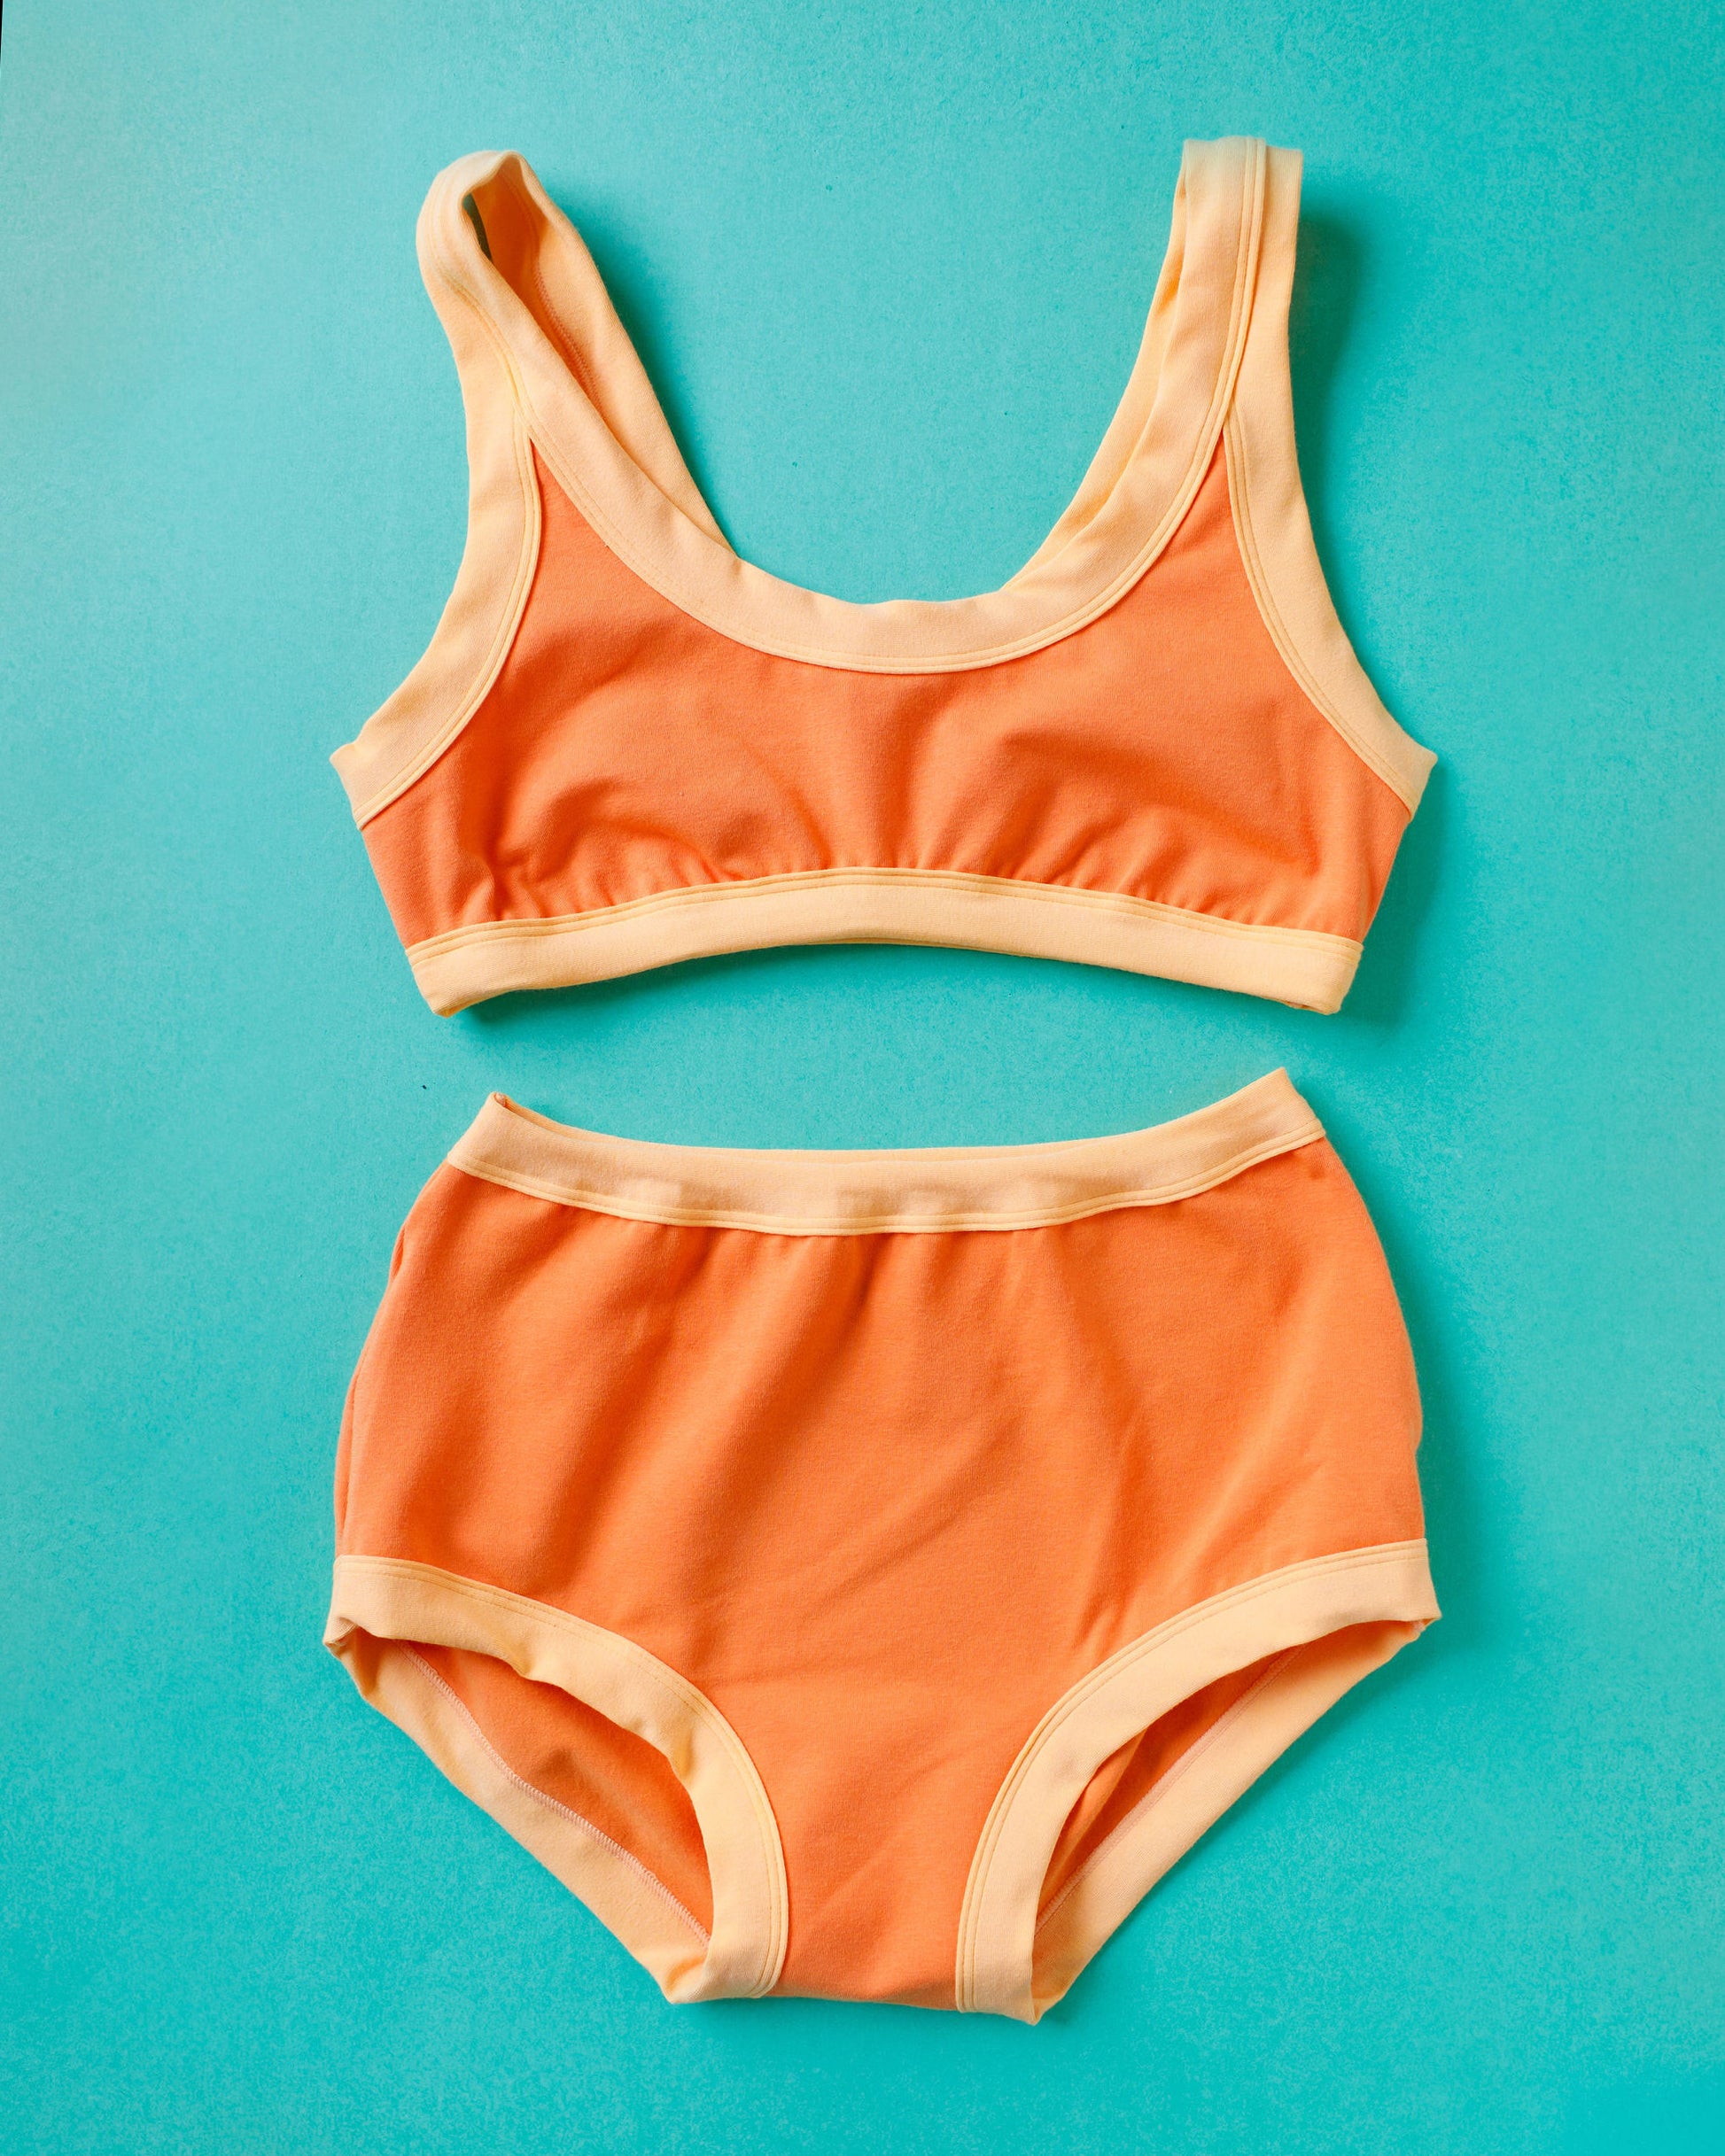 Flat lay of Thunderpants Bralette and Original style underwear in Creamsicle: dark orange with light orange binding.